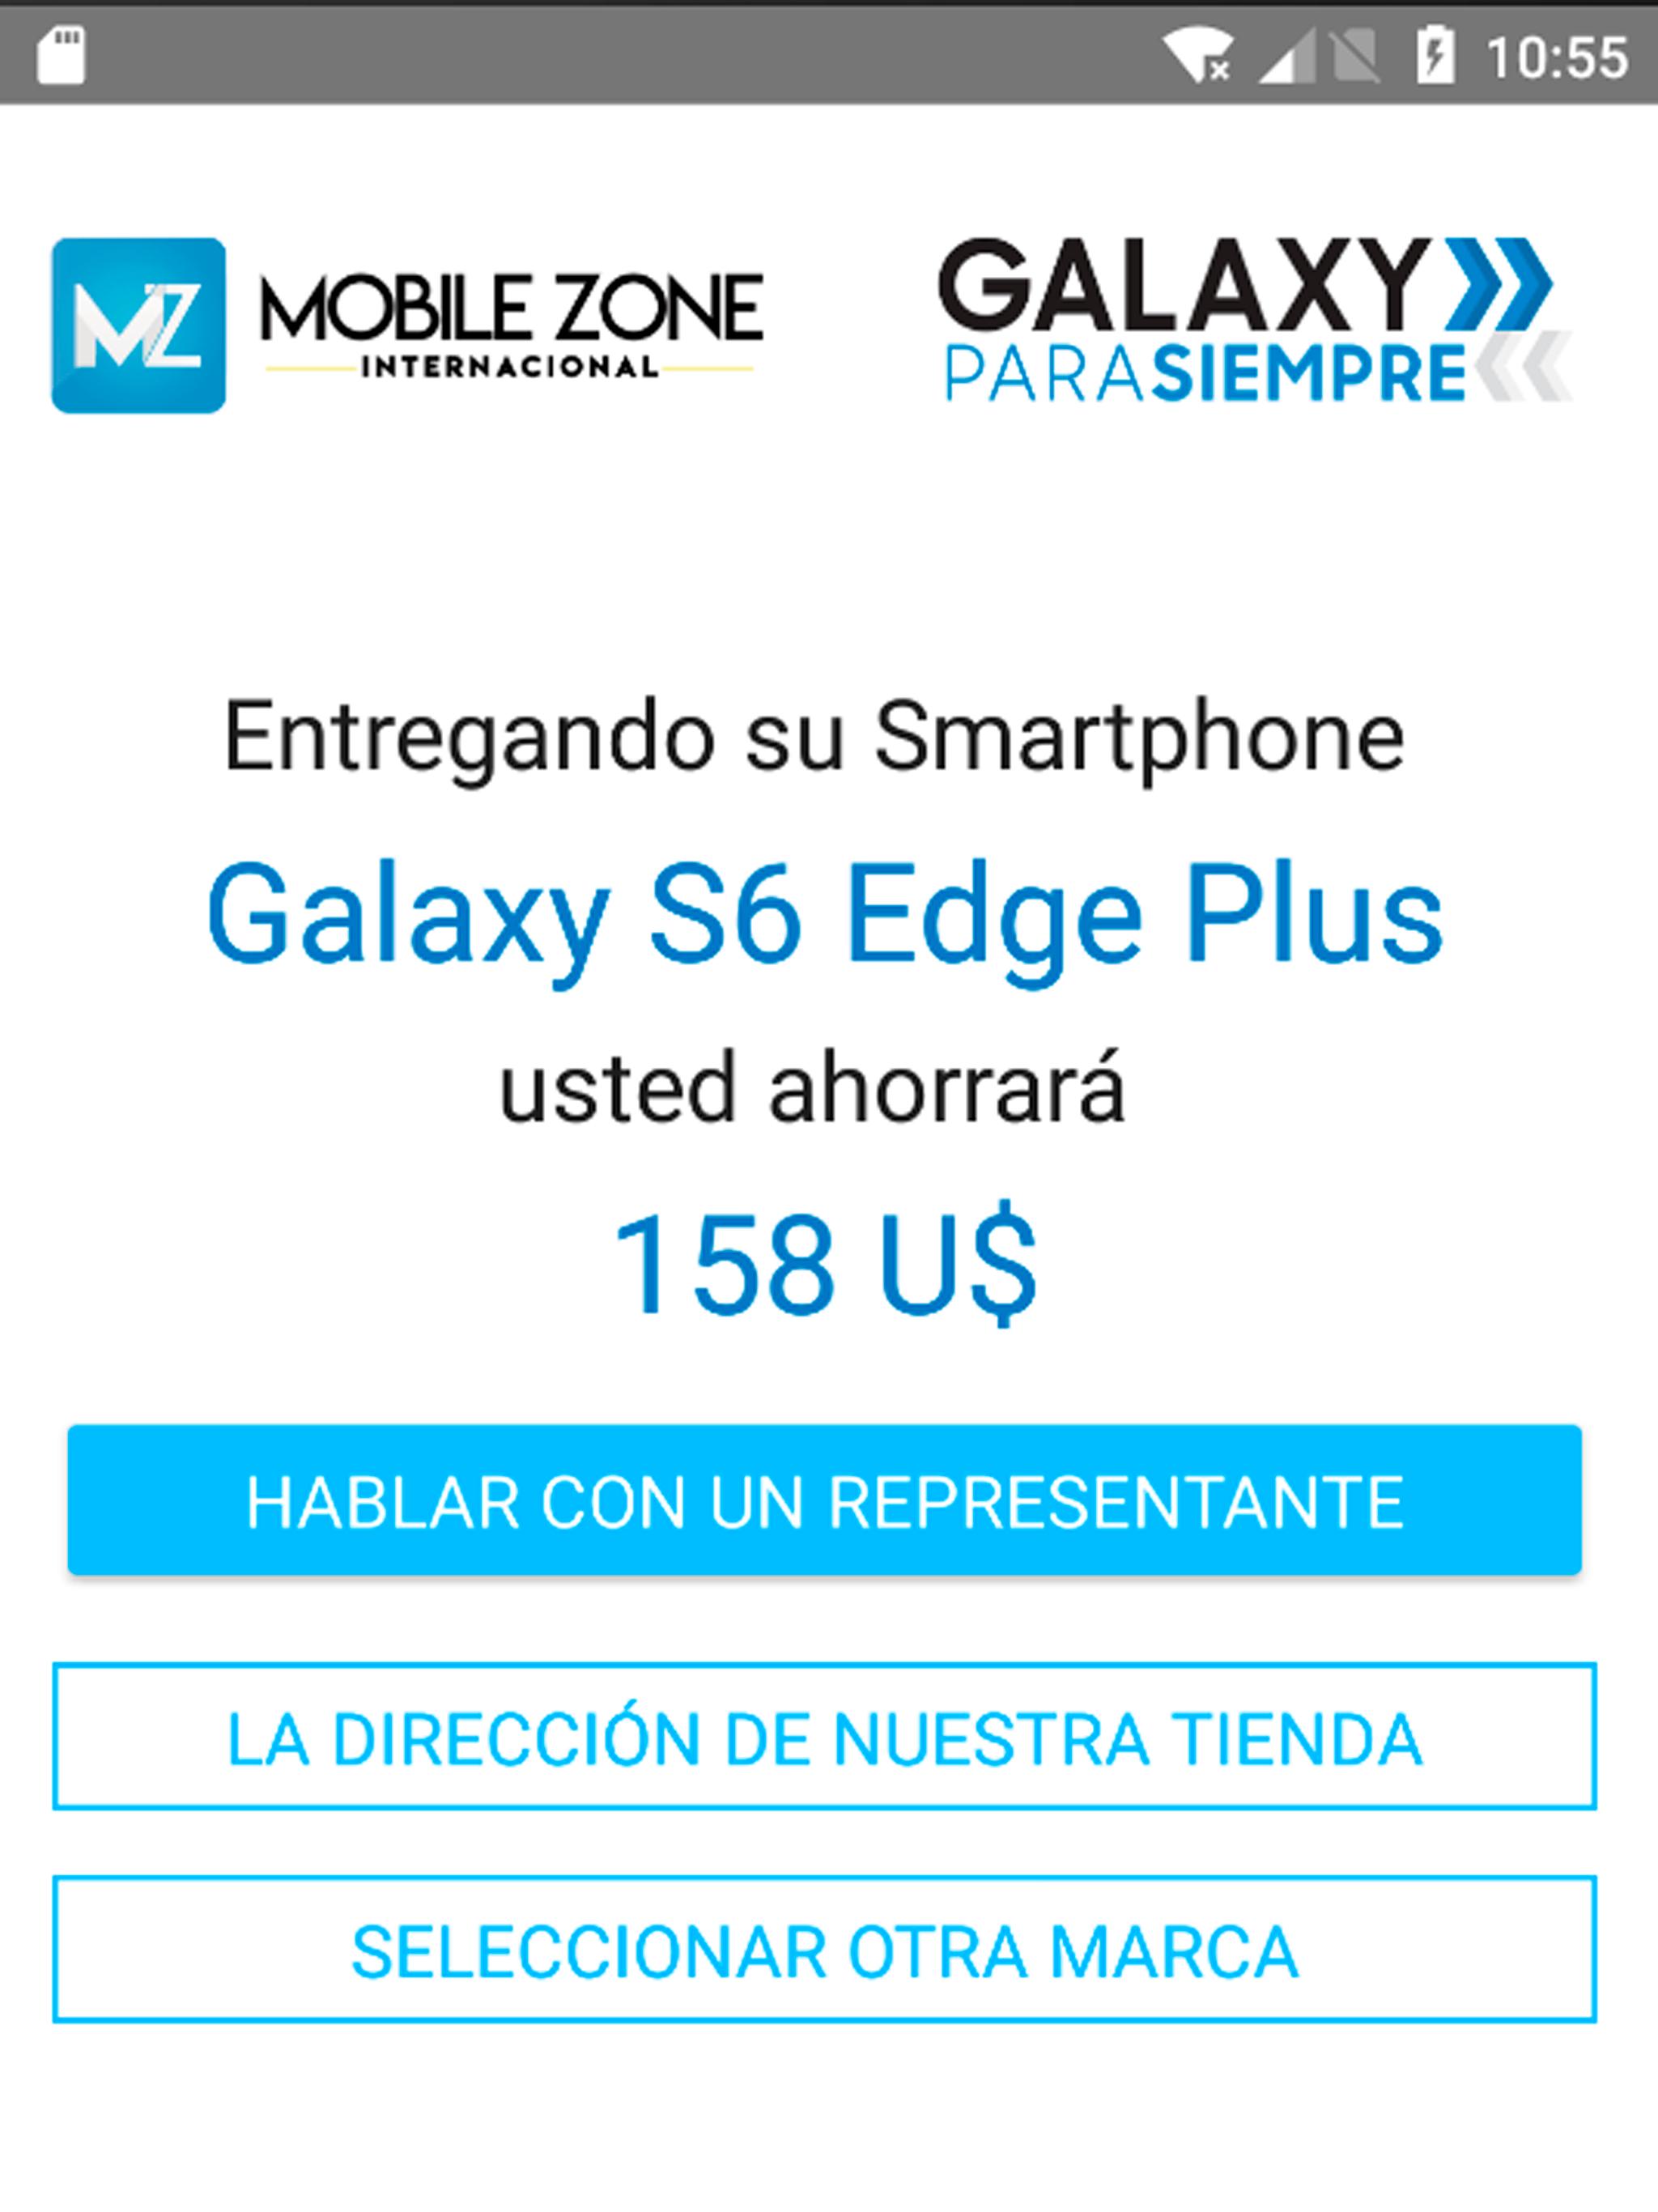 Loja Mobile Zone no Paraguai 